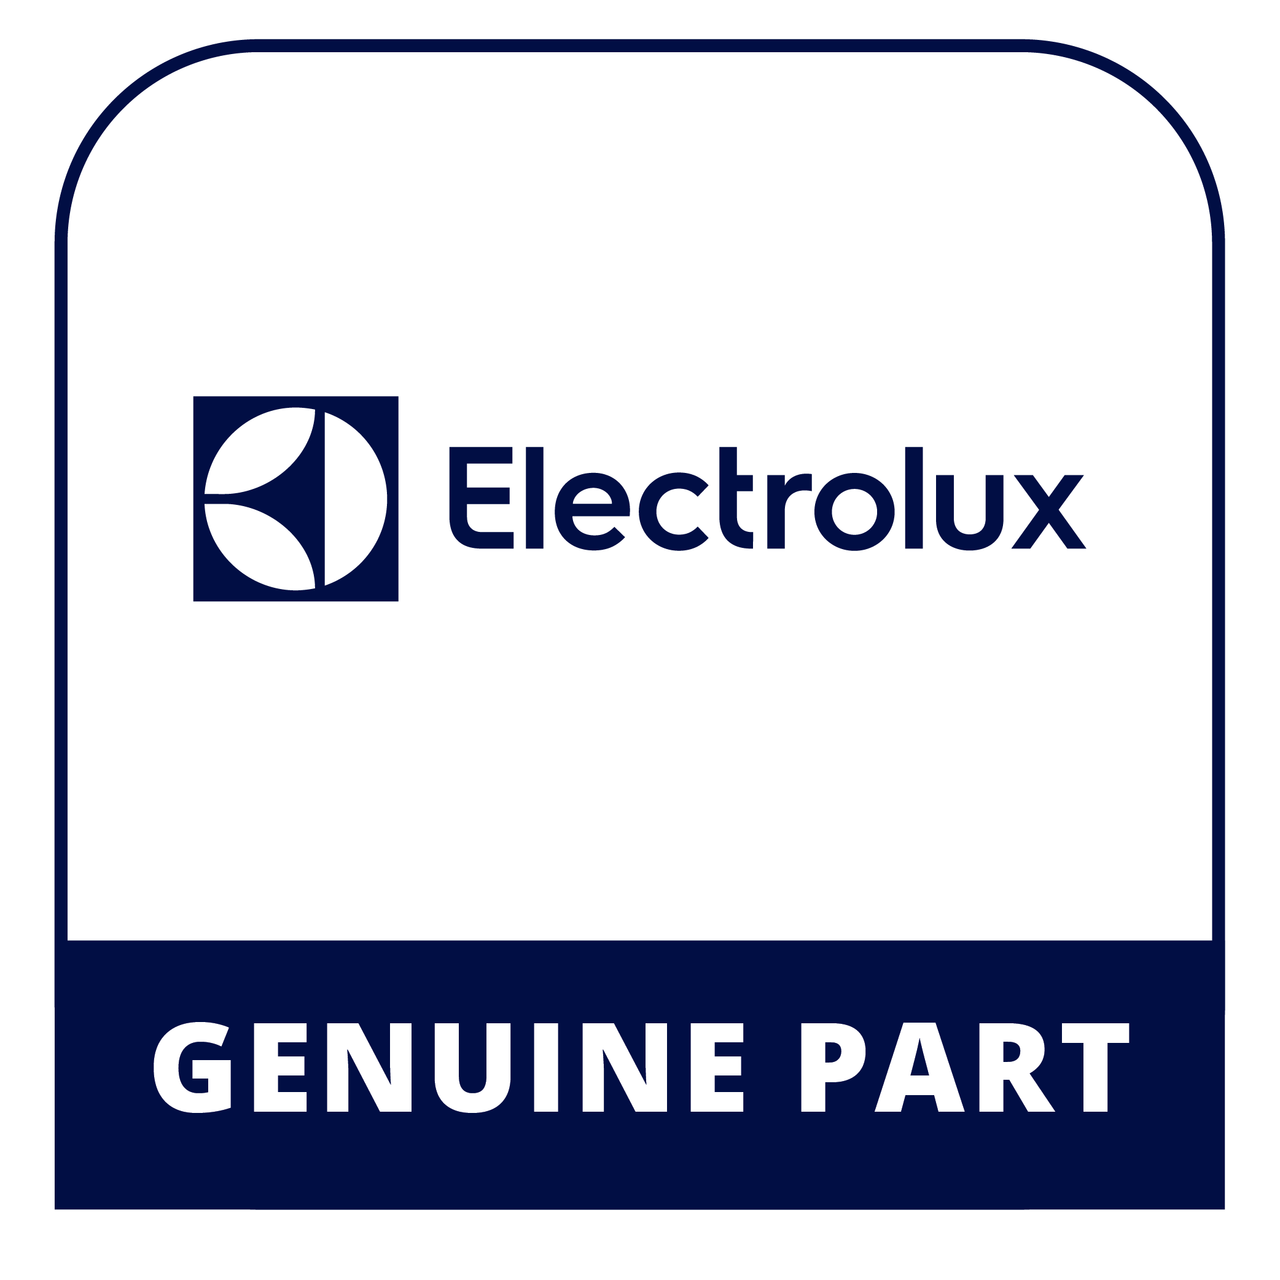 Frigidaire - Electrolux 242215901 Slide - Genuine Electrolux Part